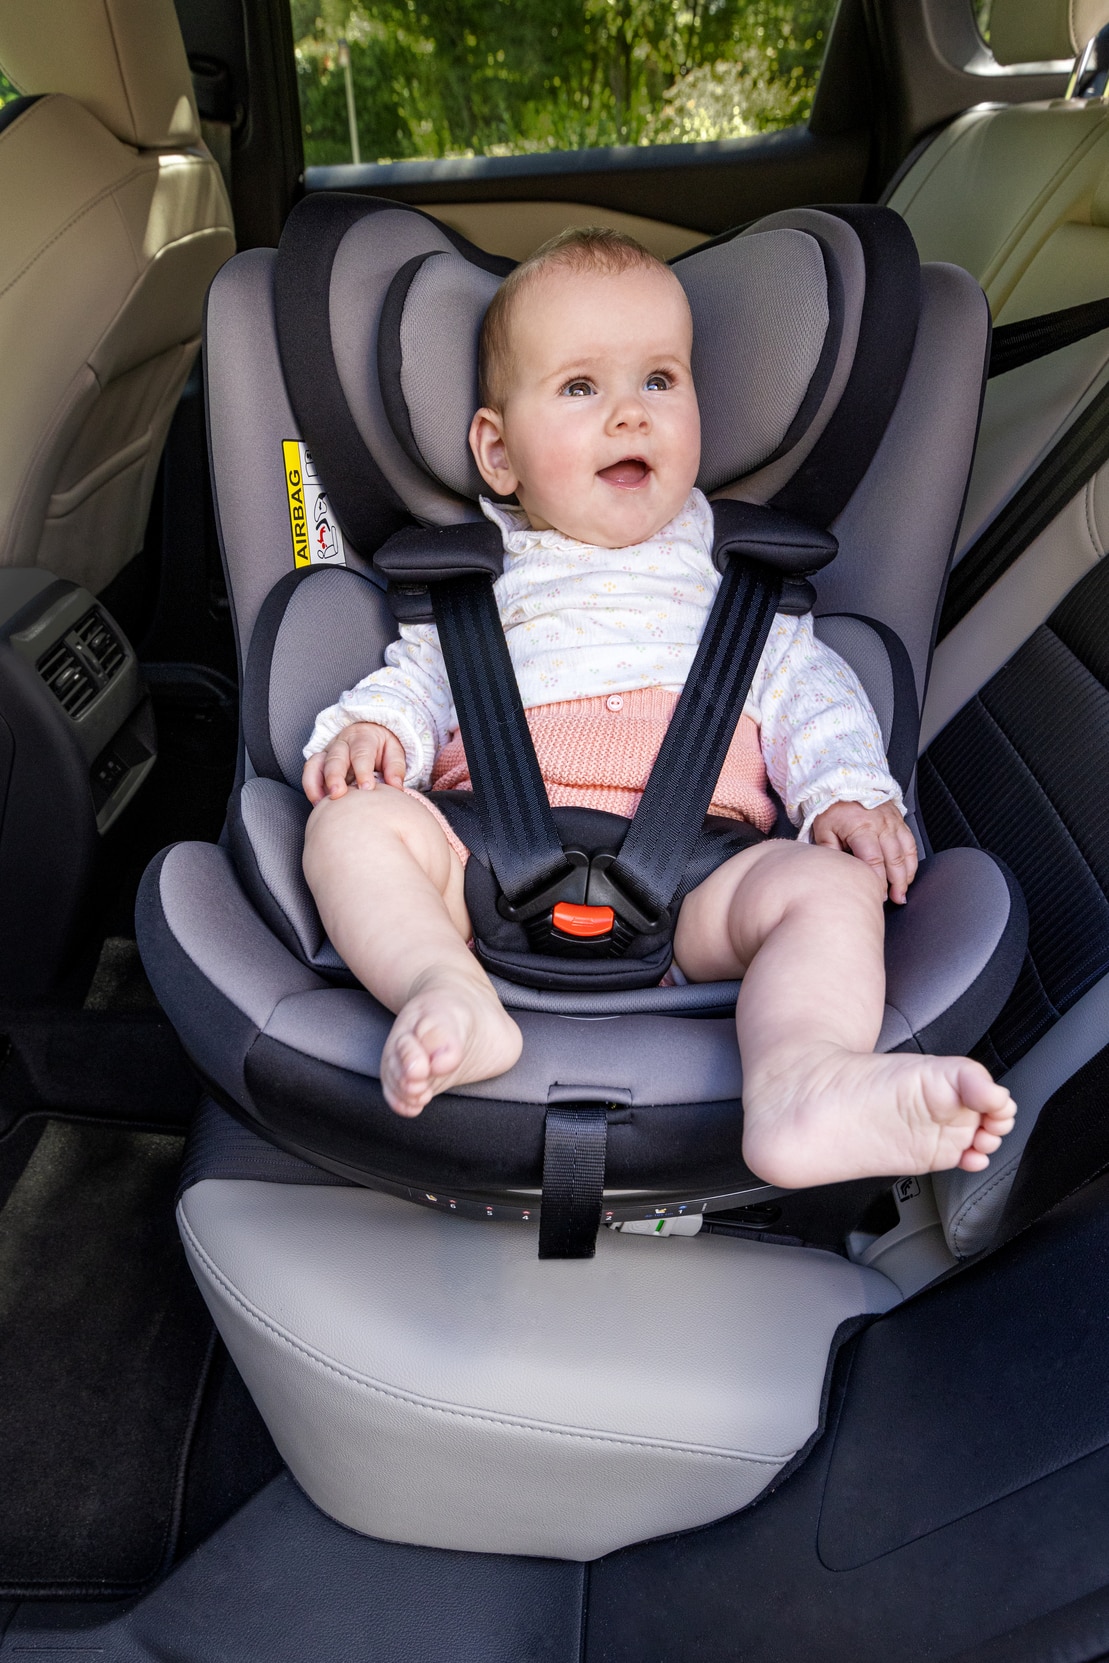 Cosy bébé confort - Équipement auto